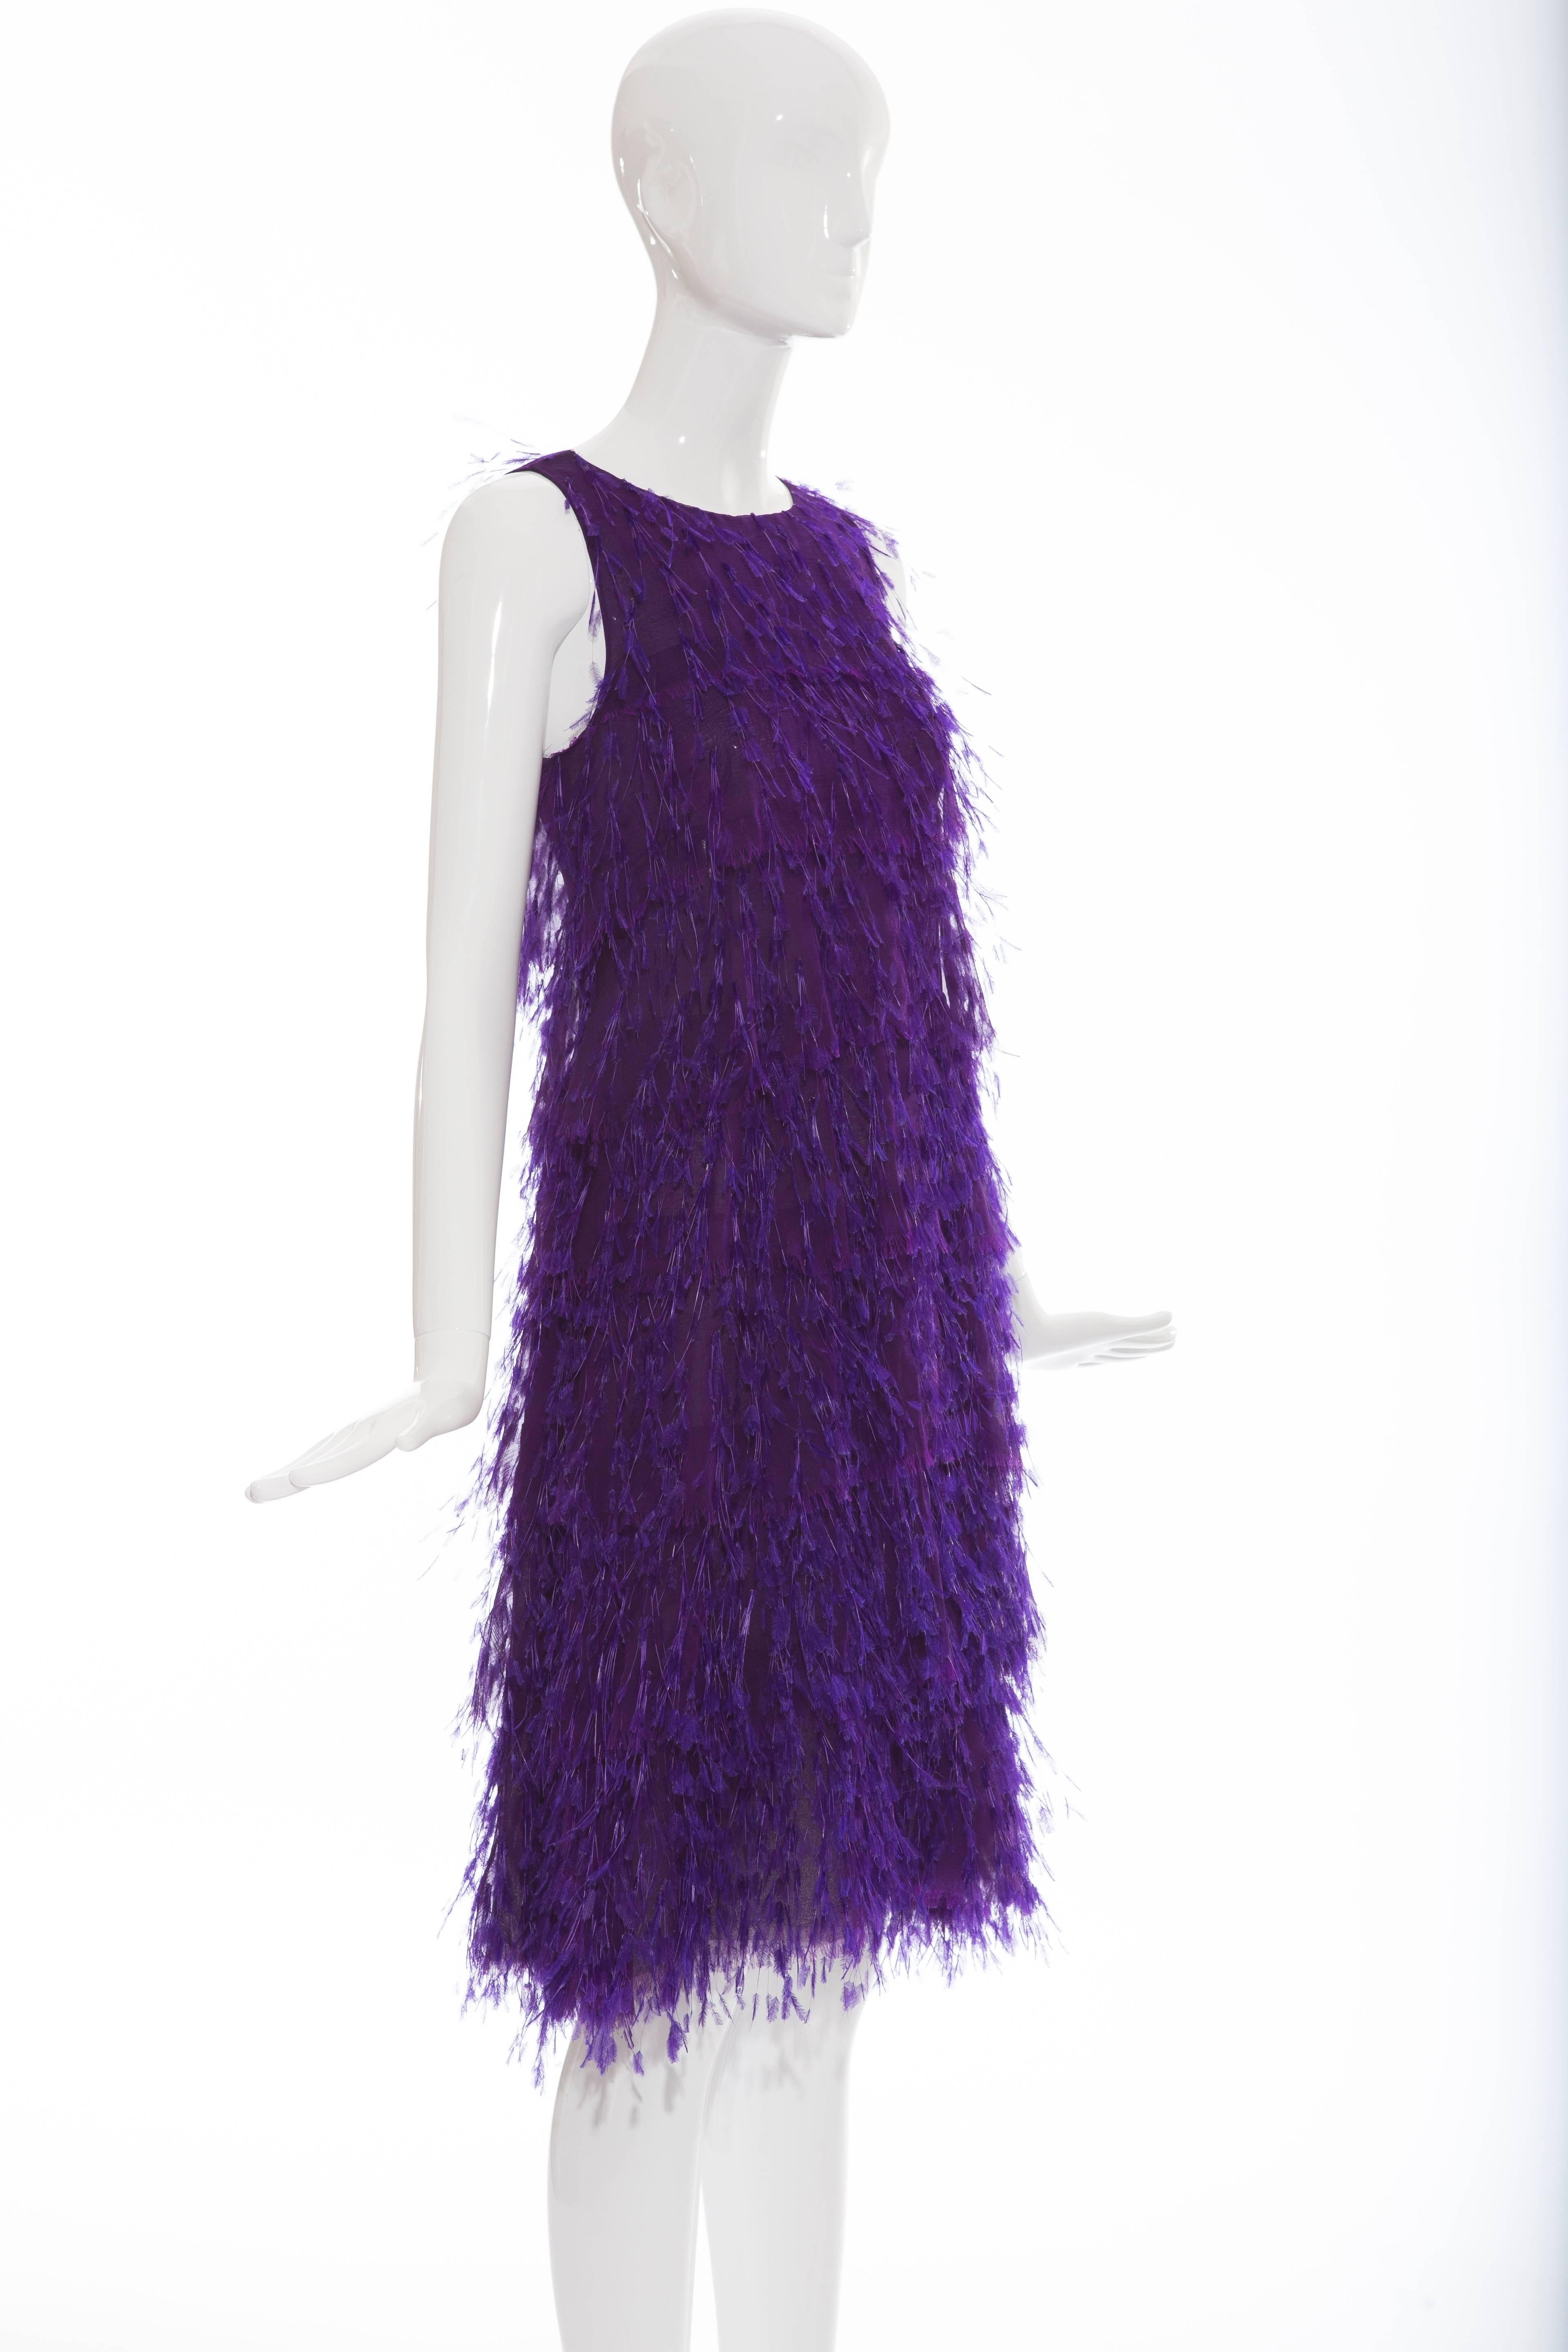 Women's Chado Ralph Rucci Silk Dress With Feather Detail, Fall 2013